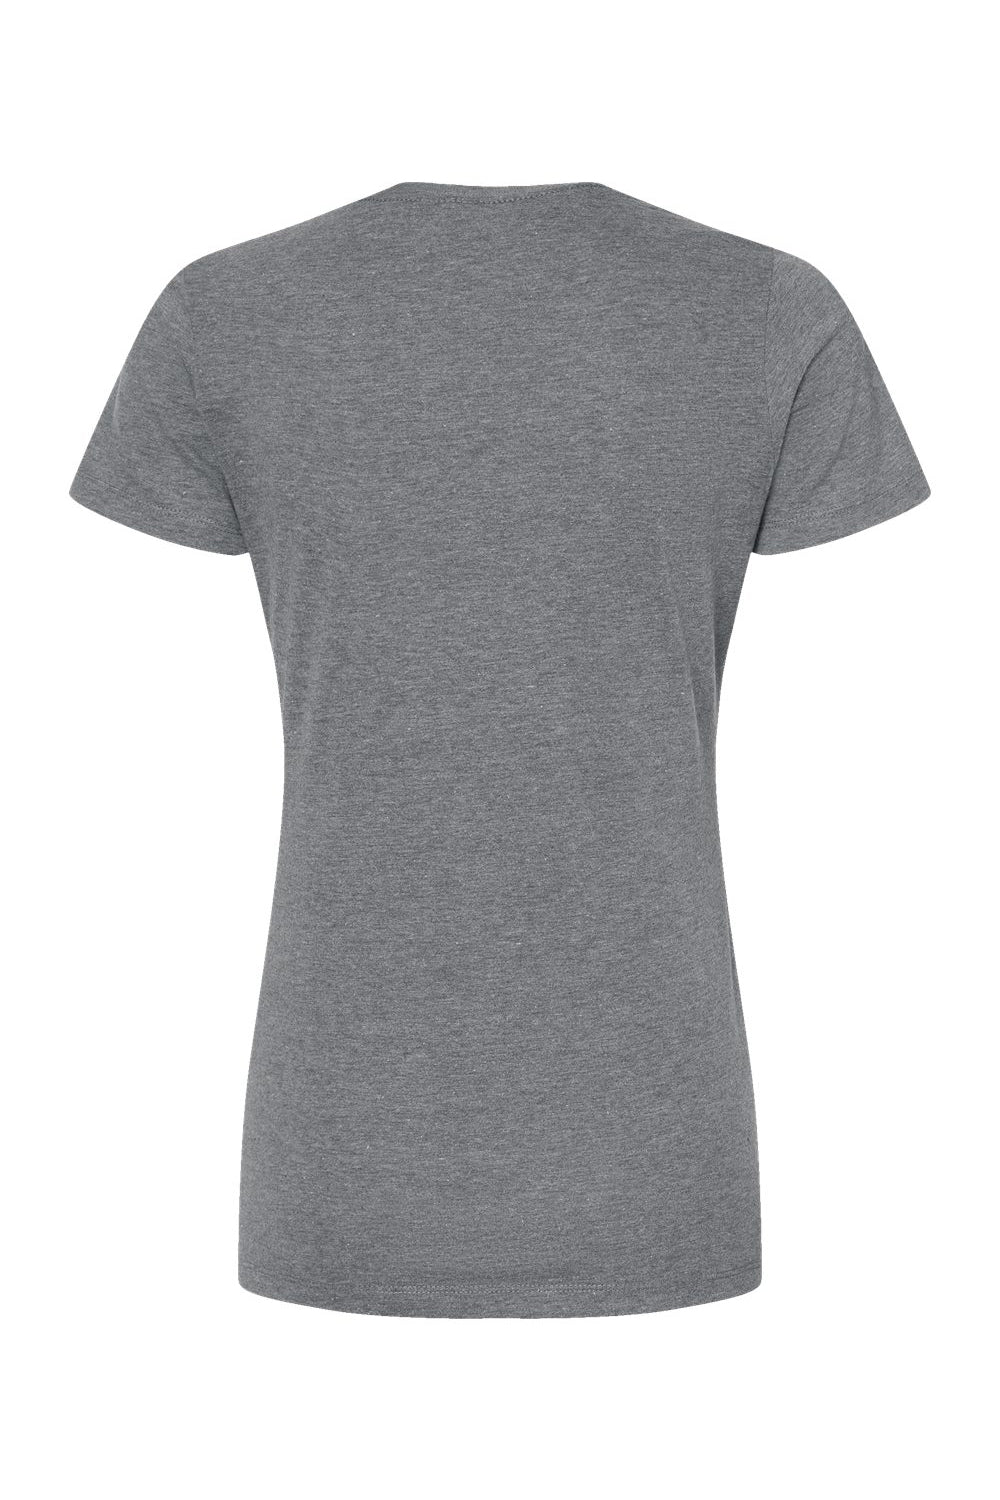 Tultex 542 Womens Premium Short Sleeve Crewneck T-Shirt Heather Grey Flat Back